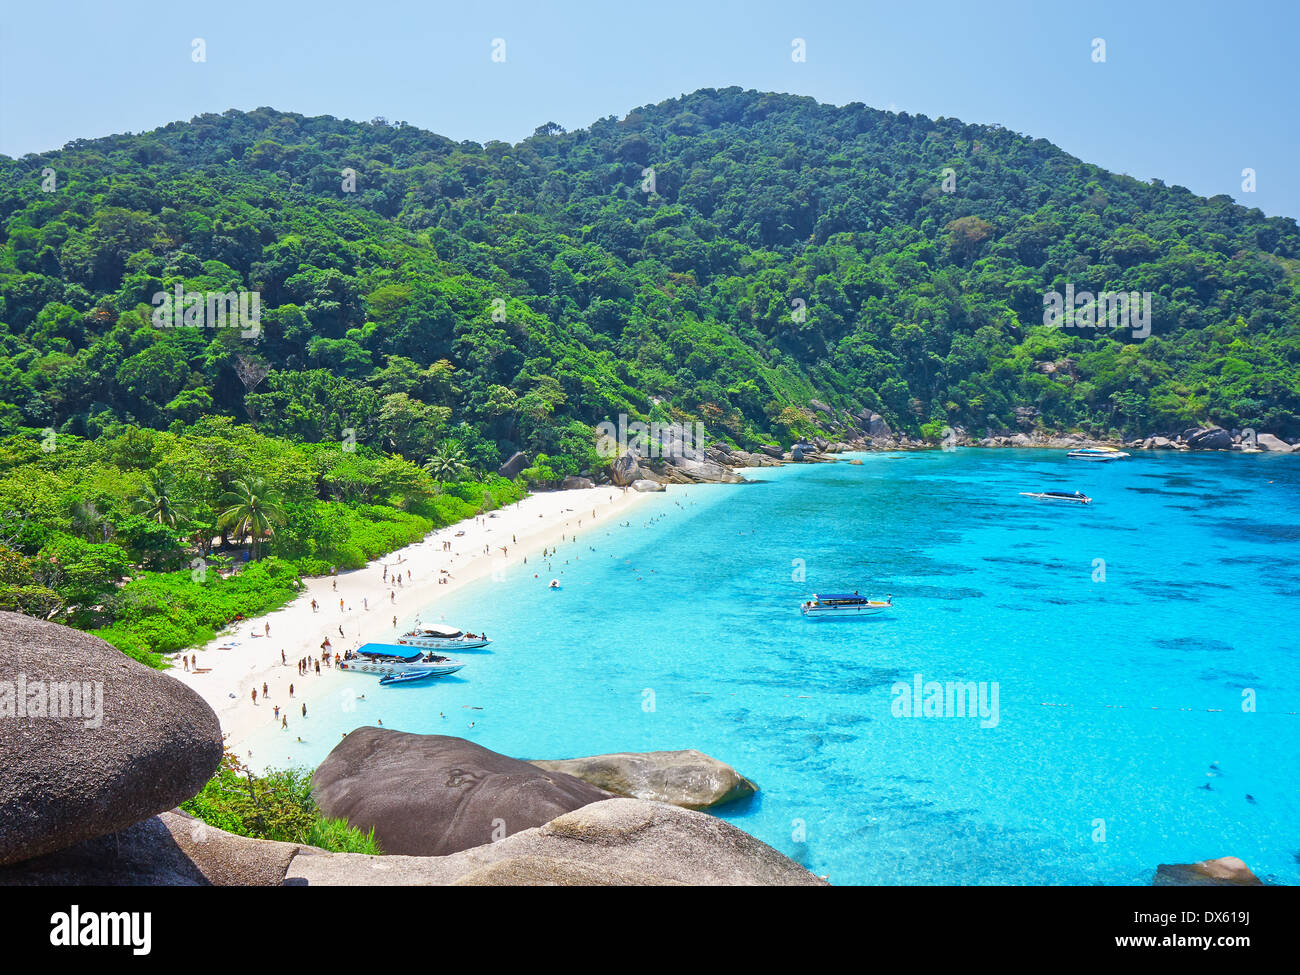 Top view of Similan island. Thailand Stock Photo